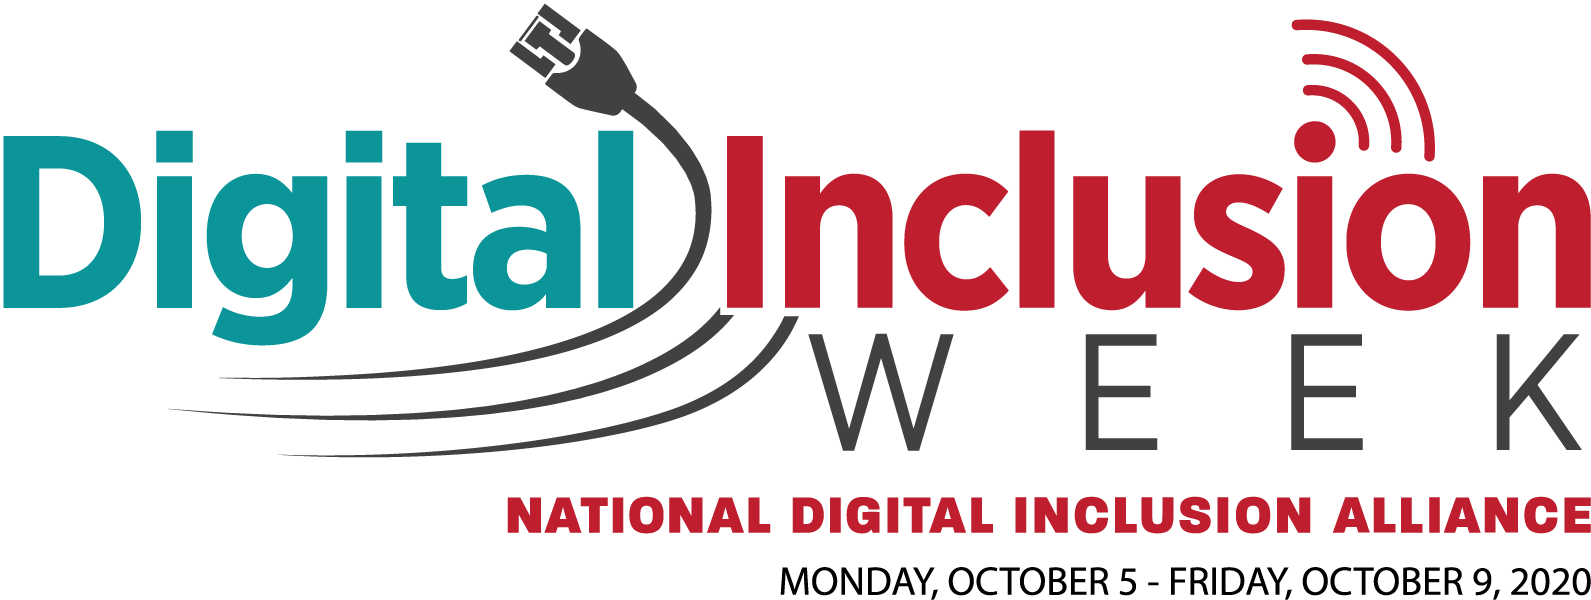 Digital Inclusion Week Web Banner